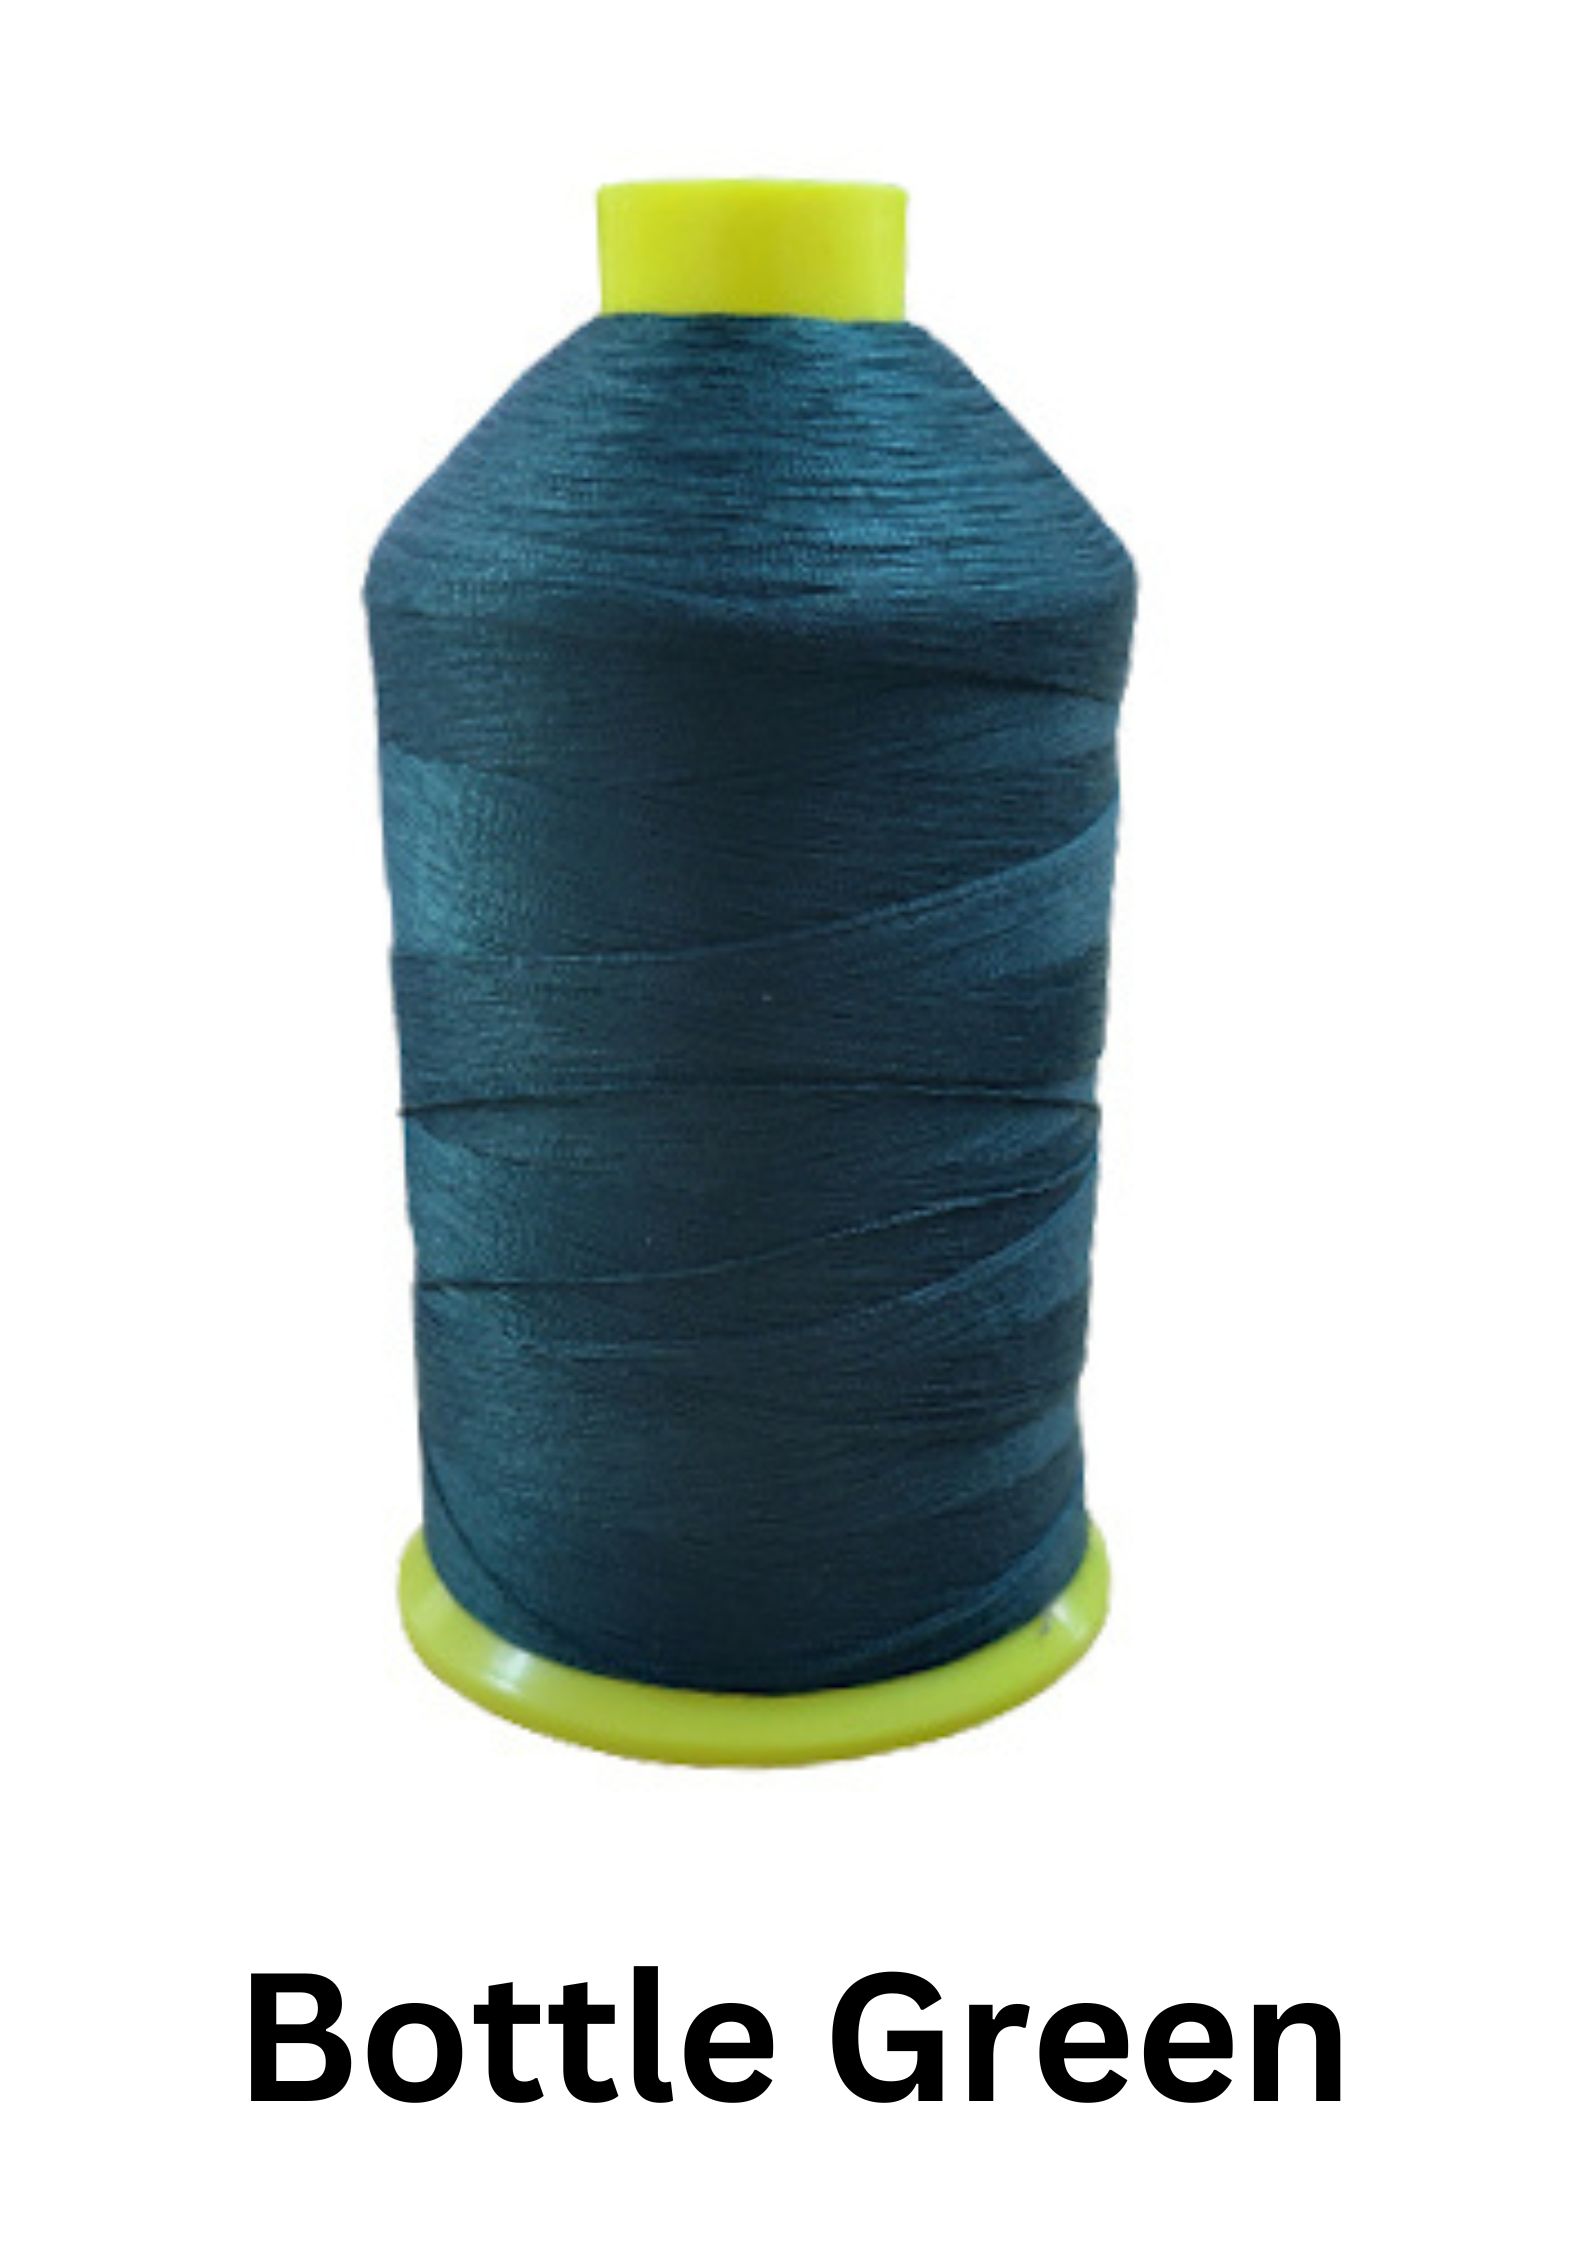 36 Spun Polycore Industrial Sewing Machine Thread